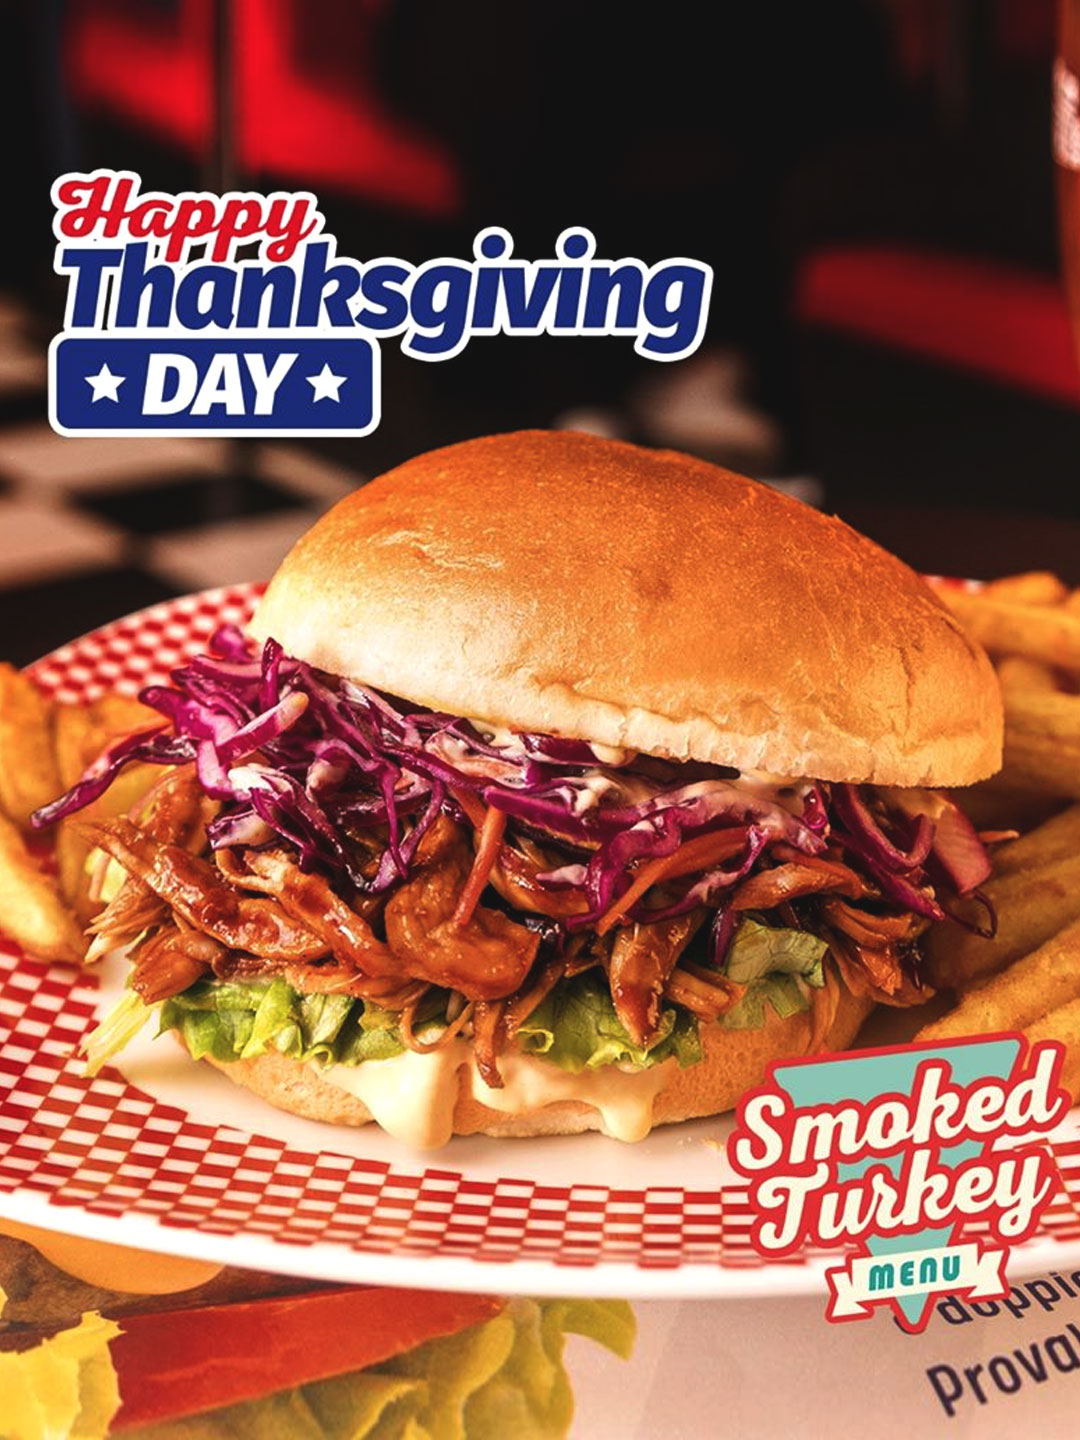 Smoked Turkey Thanksgiving offer